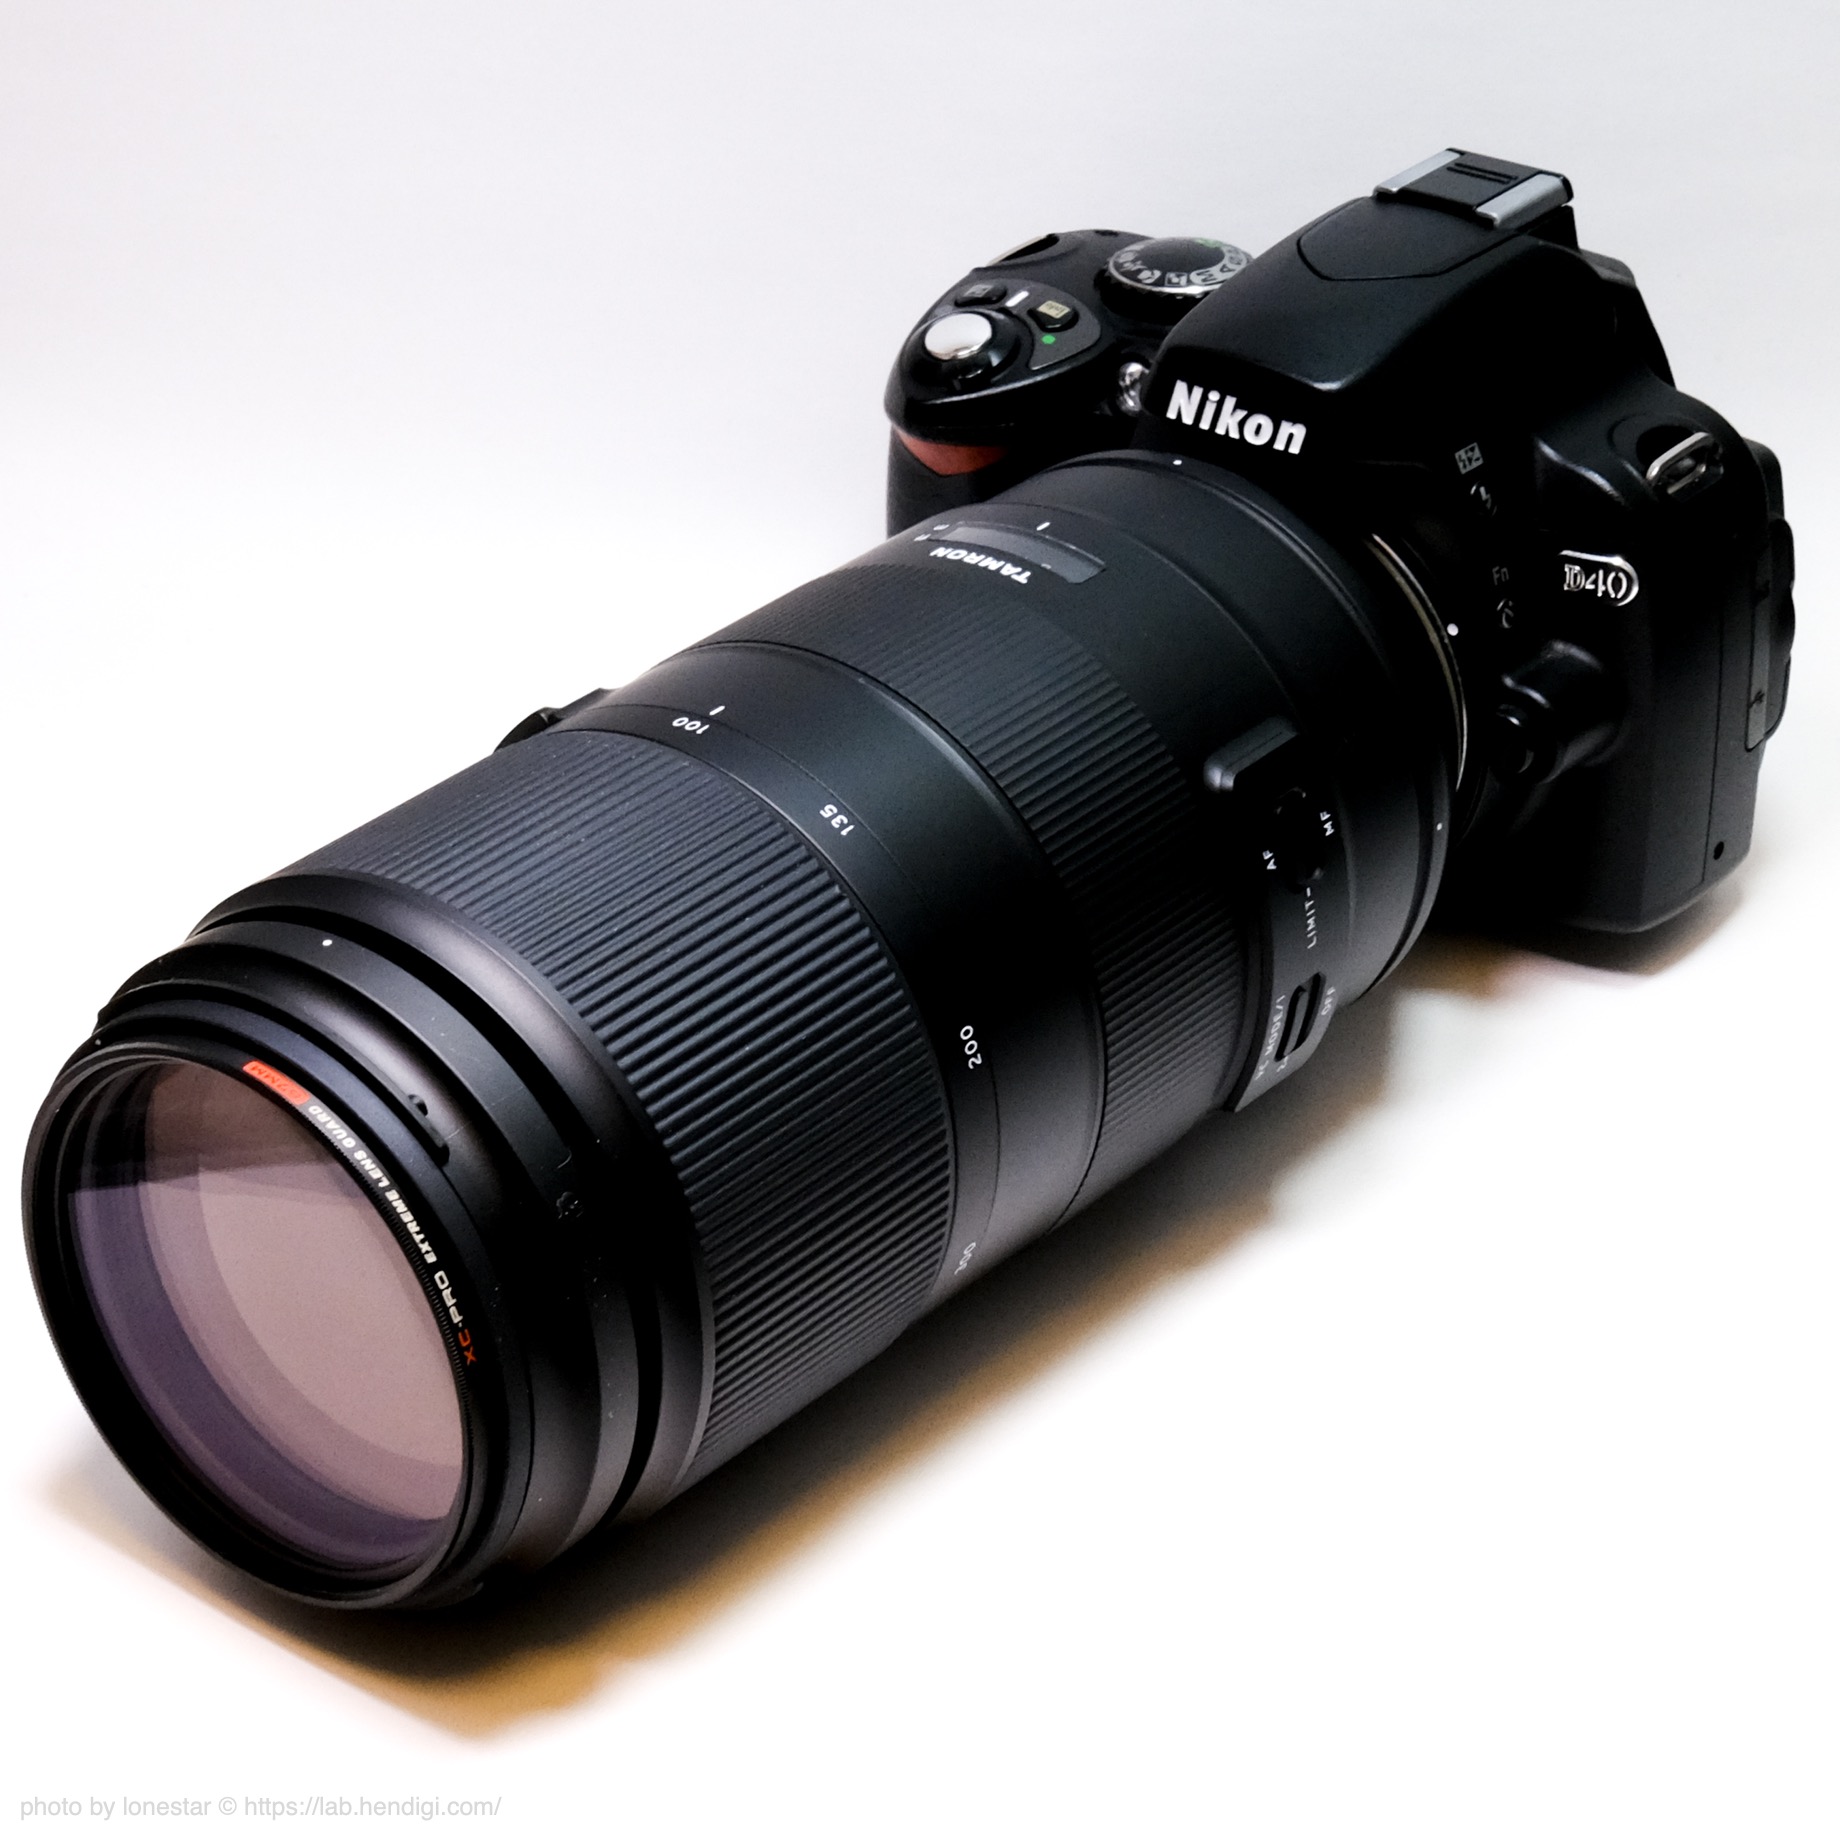 Nikon D40 望遠レンズ